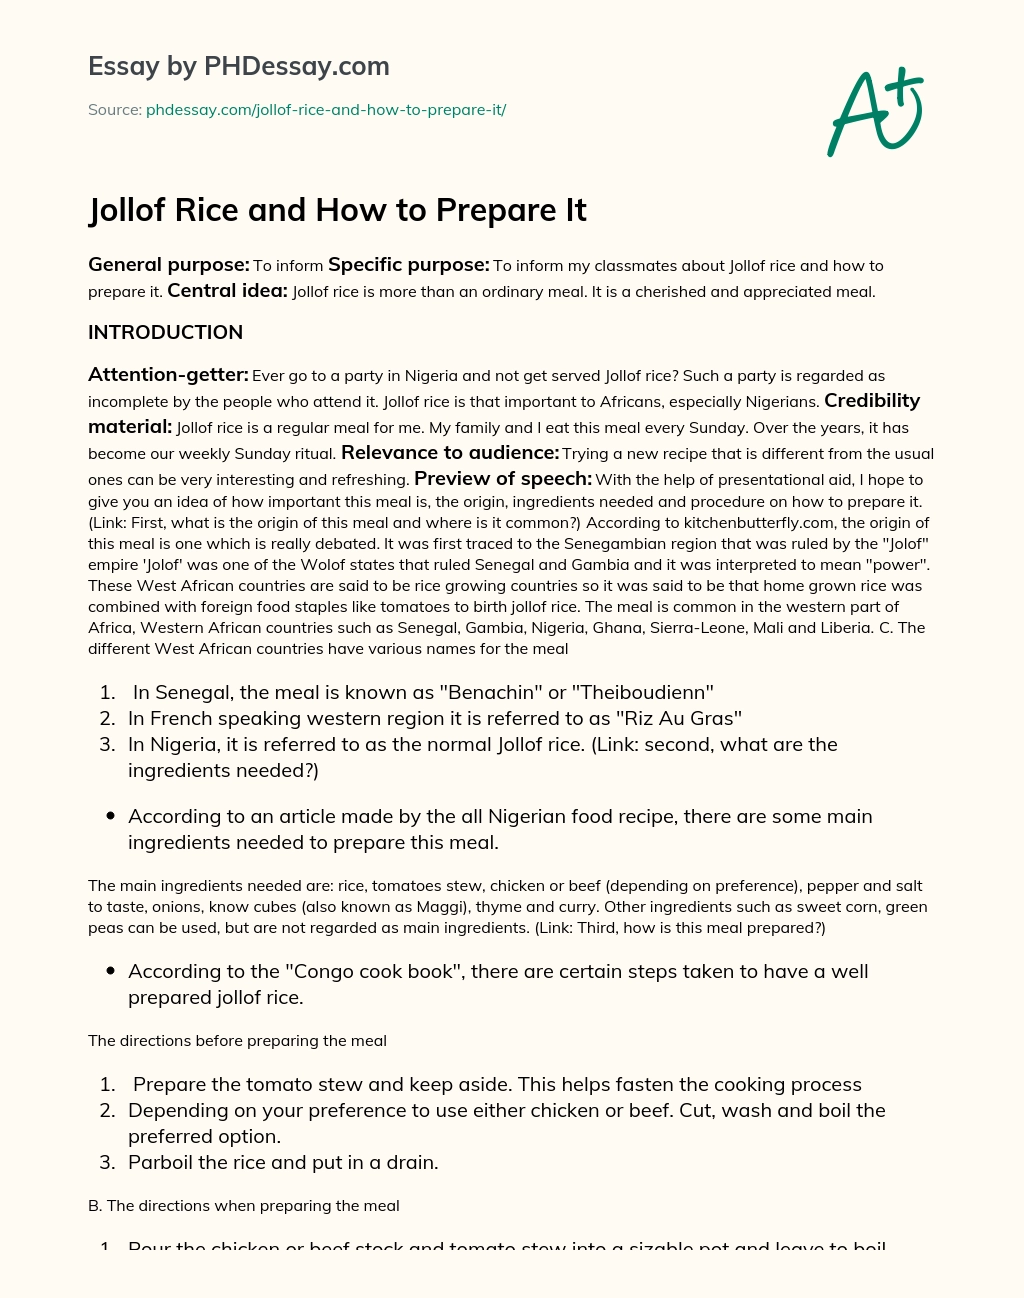 Jollof Rice and How to Prepare It essay